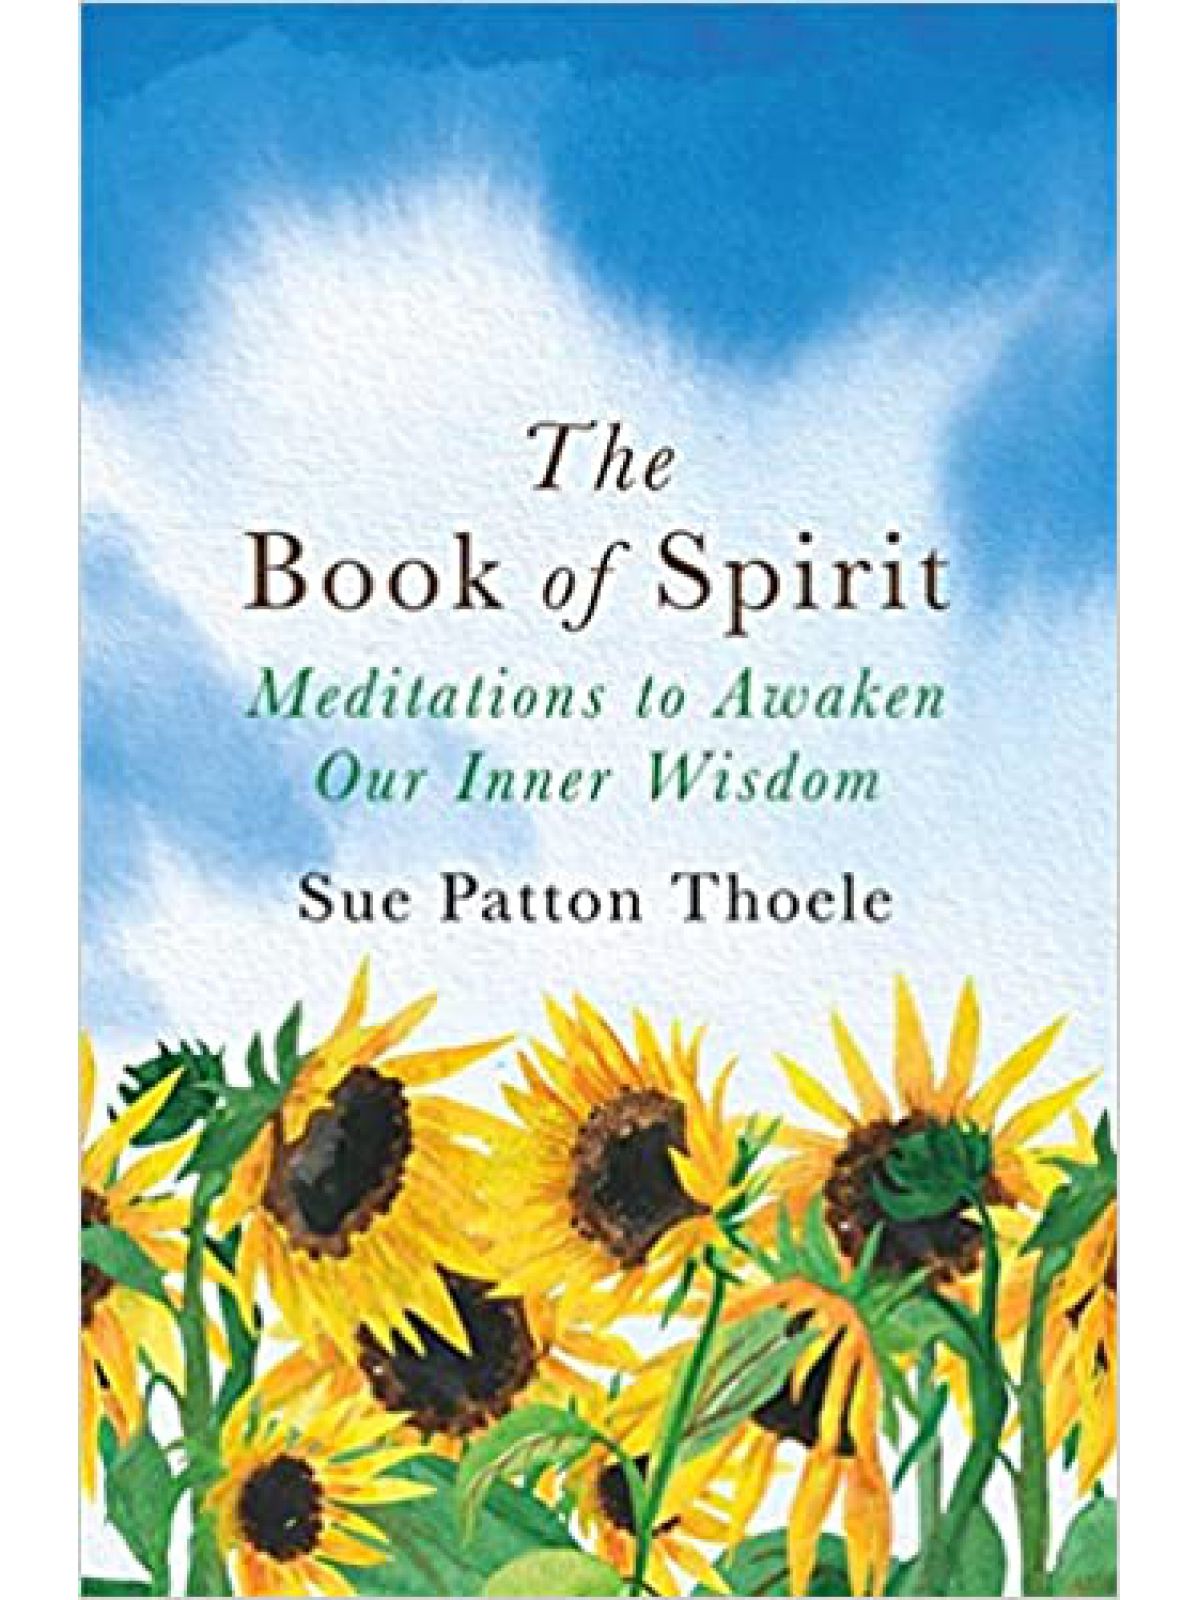 BOOK OF SPIRIT- MEDITATIONS TO AWAKEN OUR INNER WISDOM  Купить Книгу на Английском